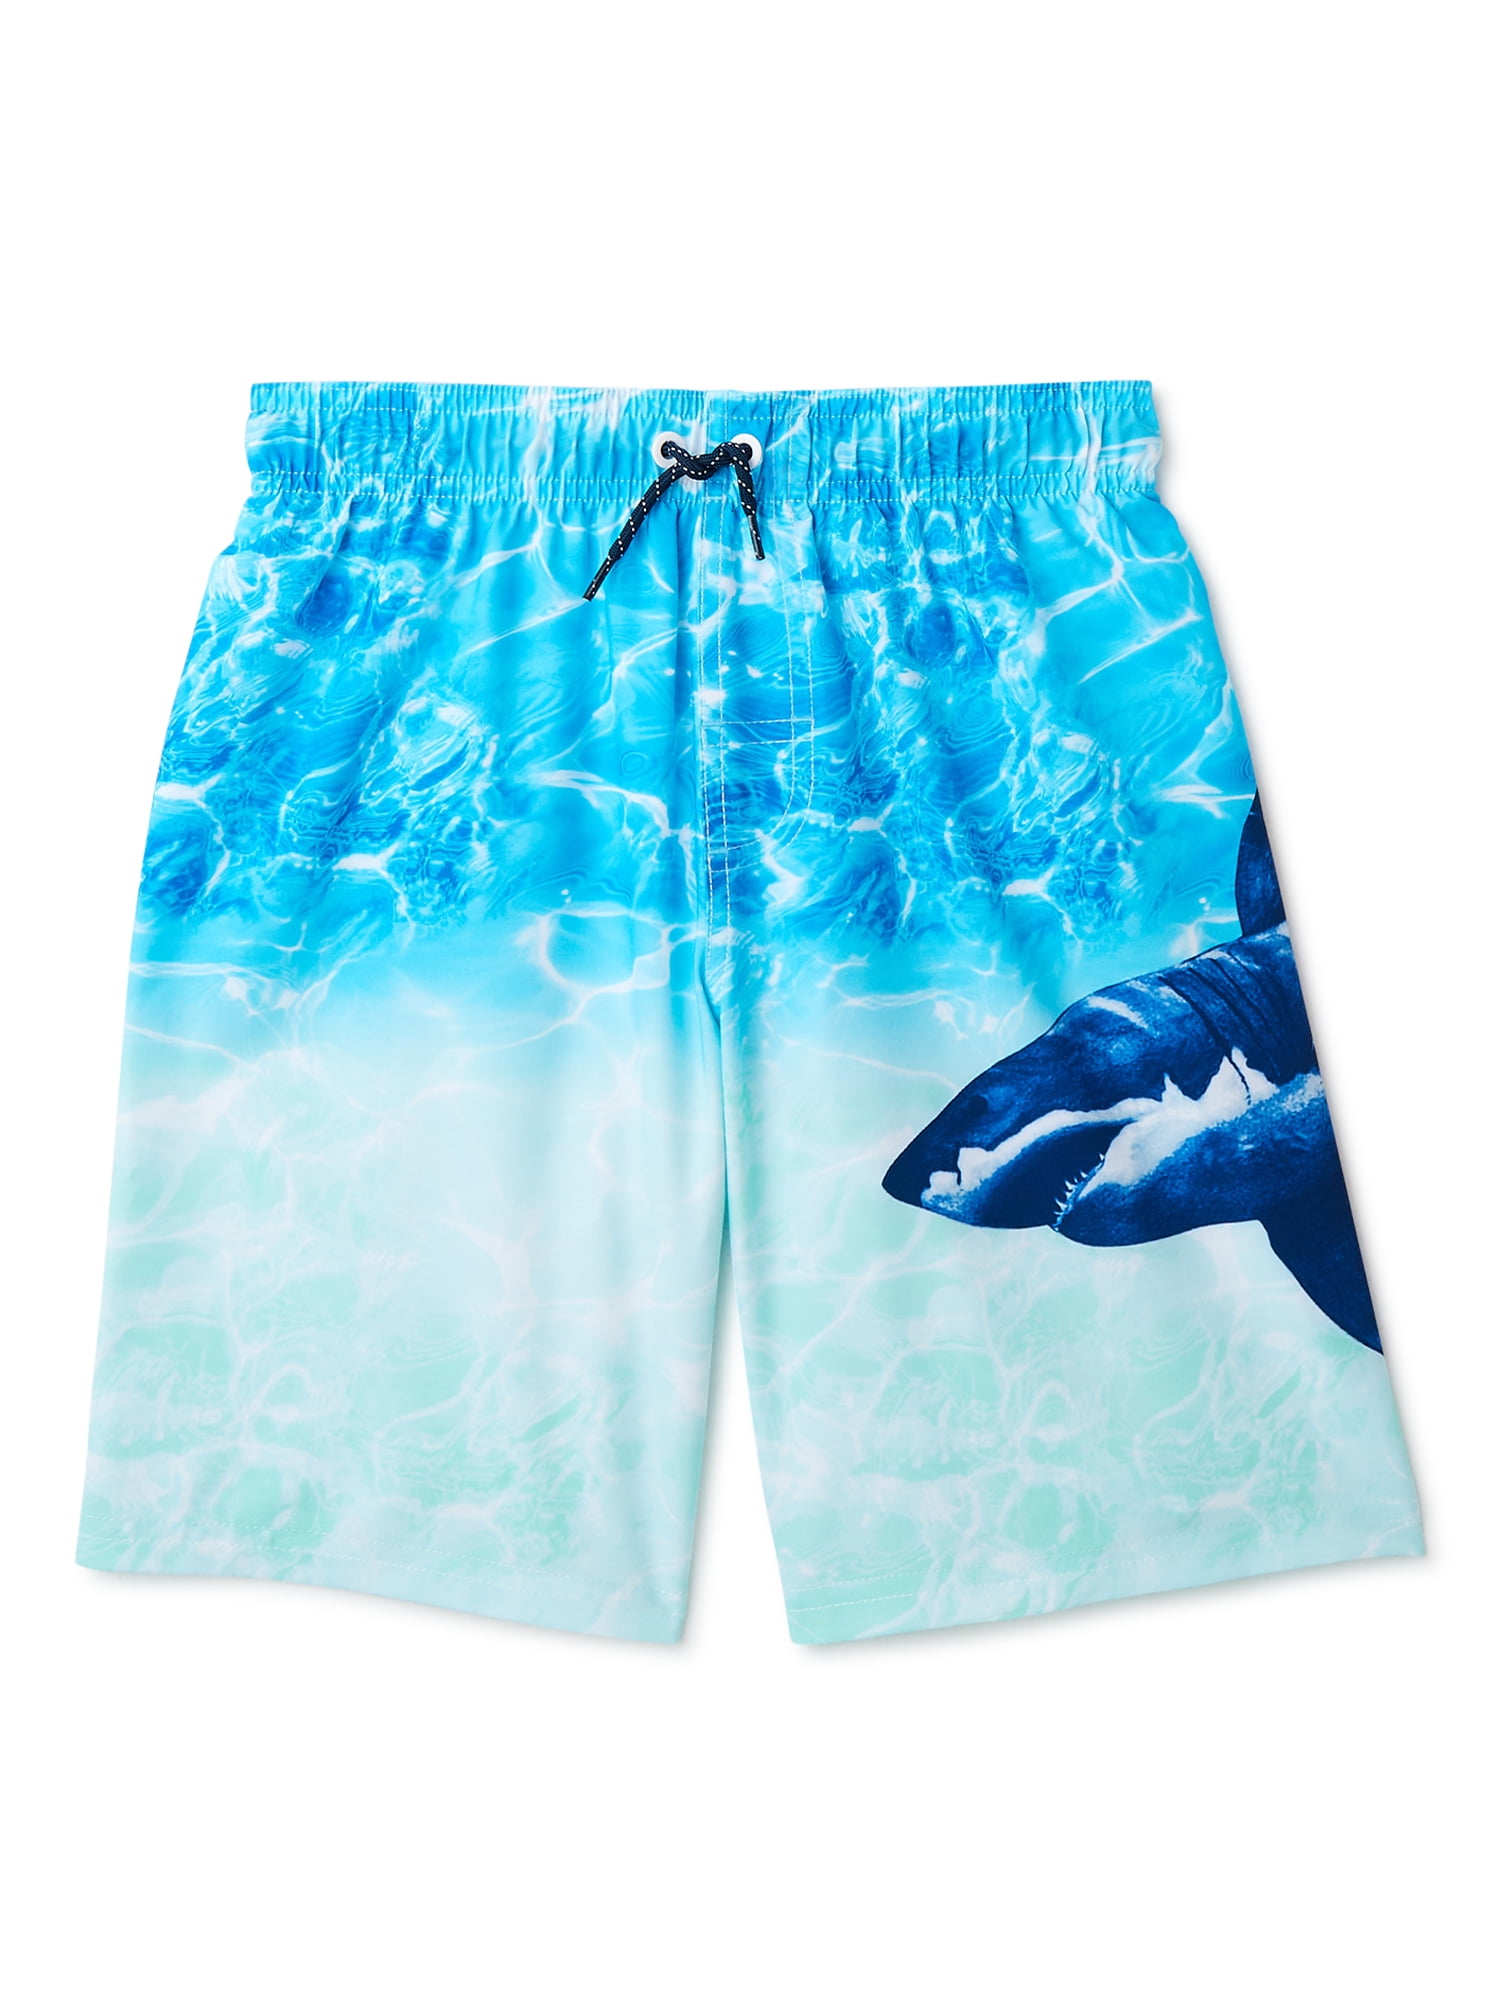 Mens Swim Trunks Summer Underwater Shark Group Sea Blue 3D Print Graphic Casual Athletic Swimming Short